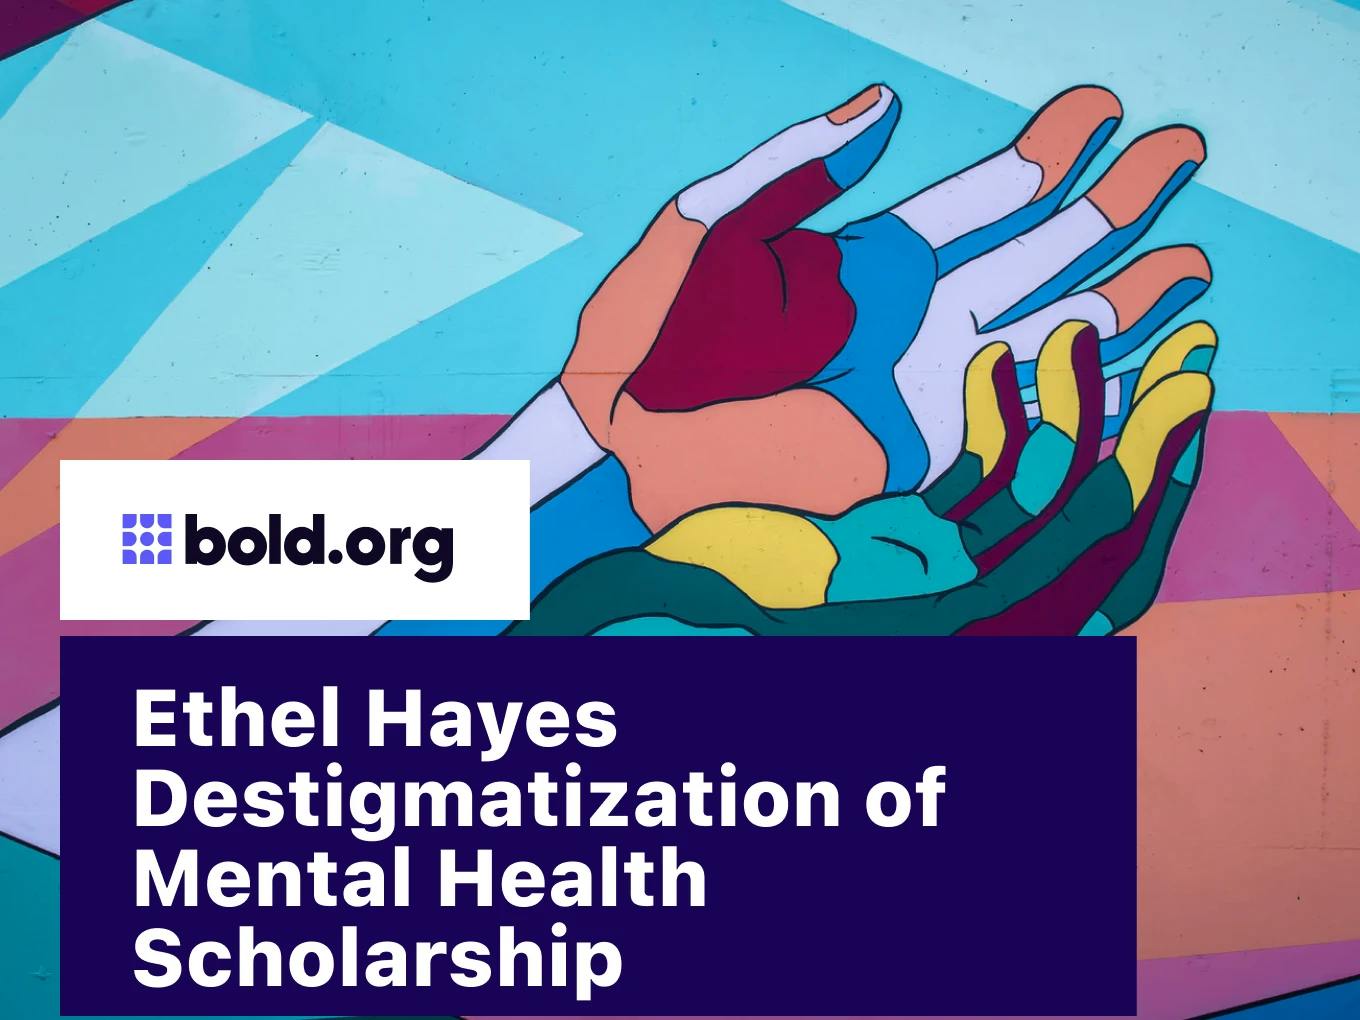 Ethel Hayes Destigmatization of Mental Health Scholarship